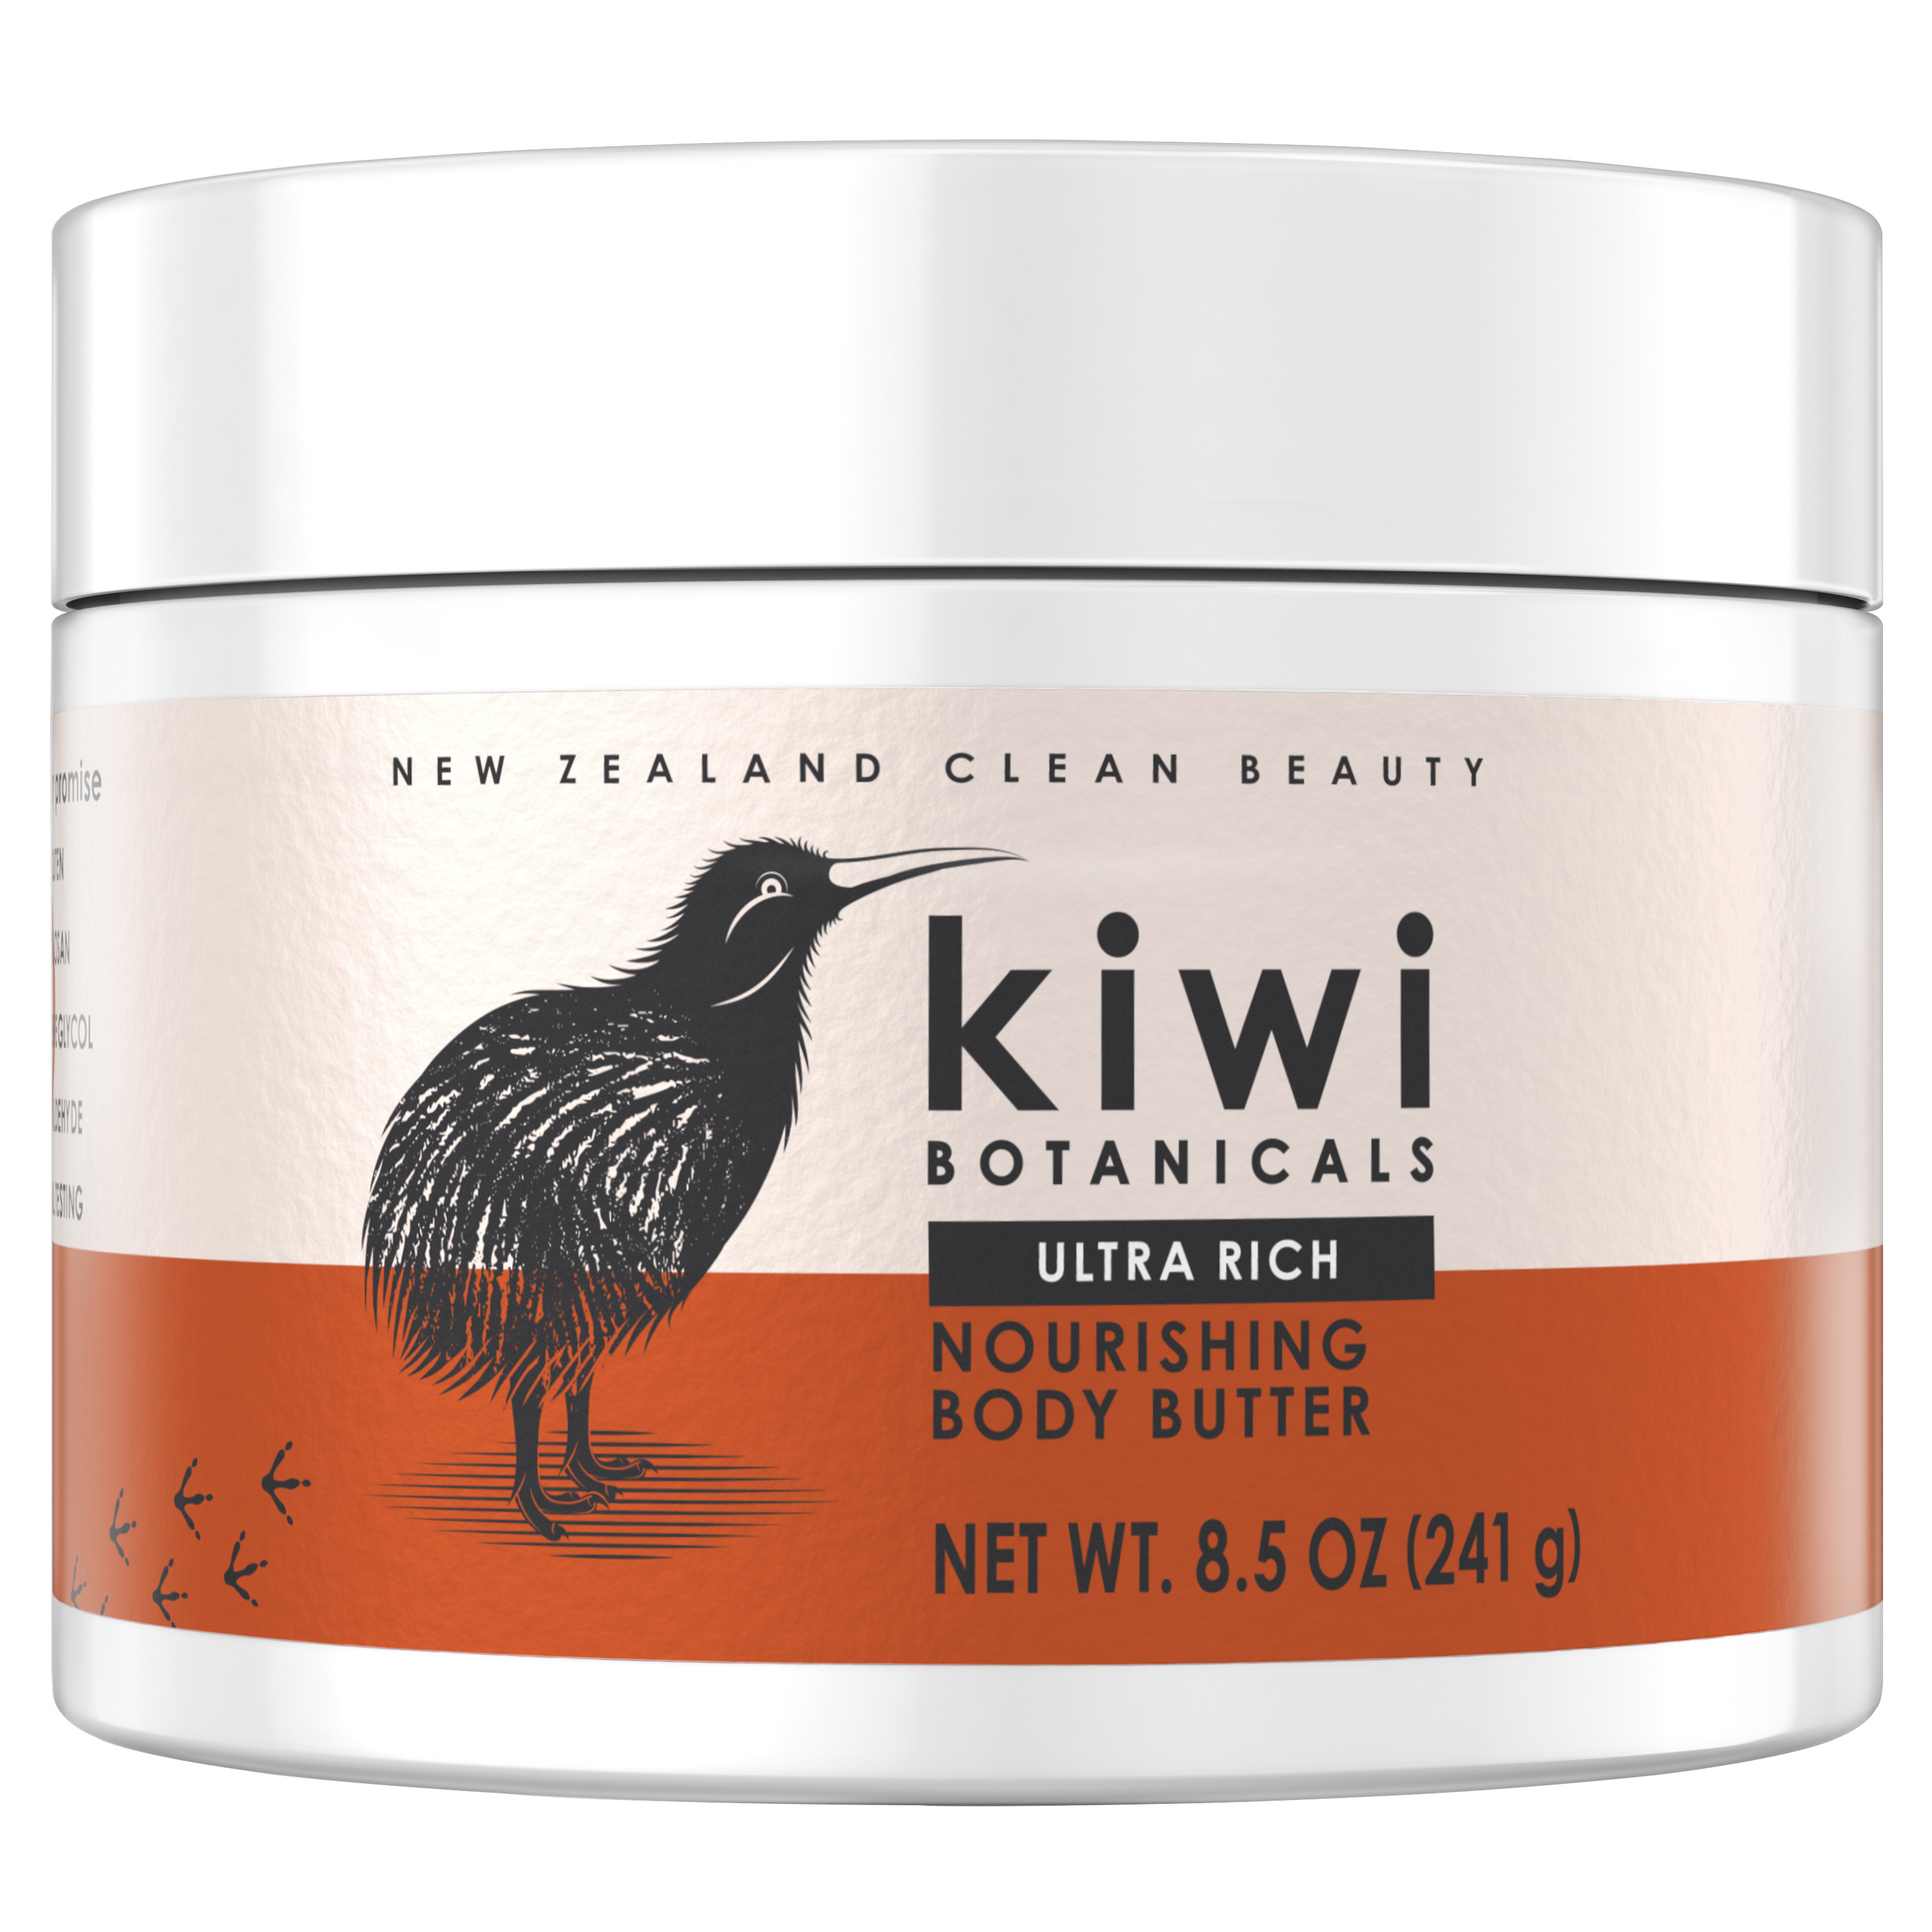 Kiwi Botanicals Nourishing Body Butter with Manuka Honey & Shea Butter for Dry Skin, 8.5 oz - image 1 of 7